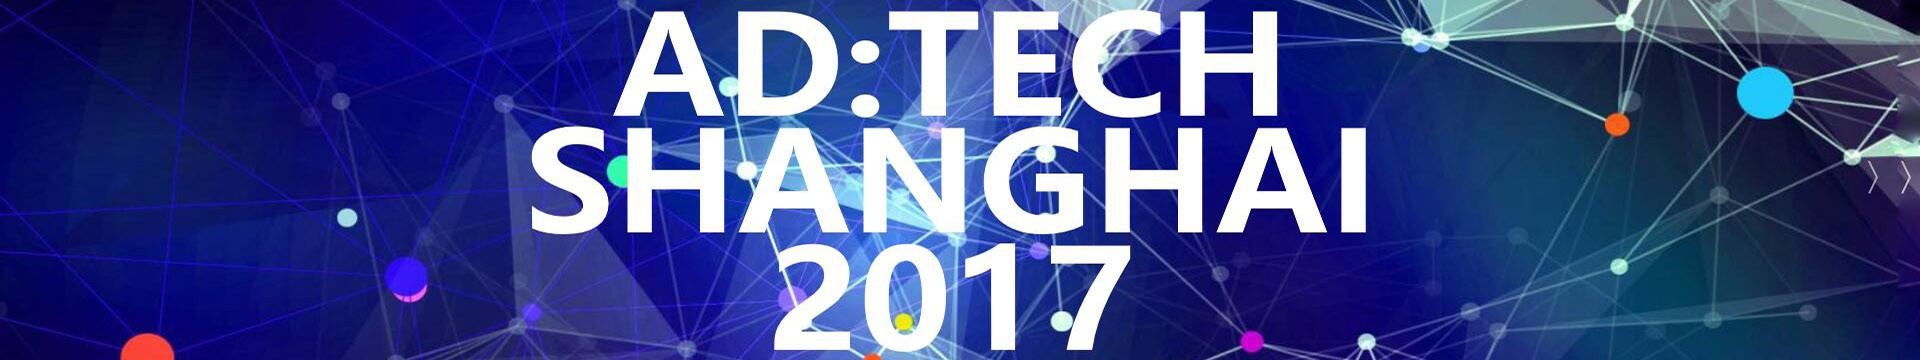 ad:tech Shanghai 2017 全球数字营销峰会